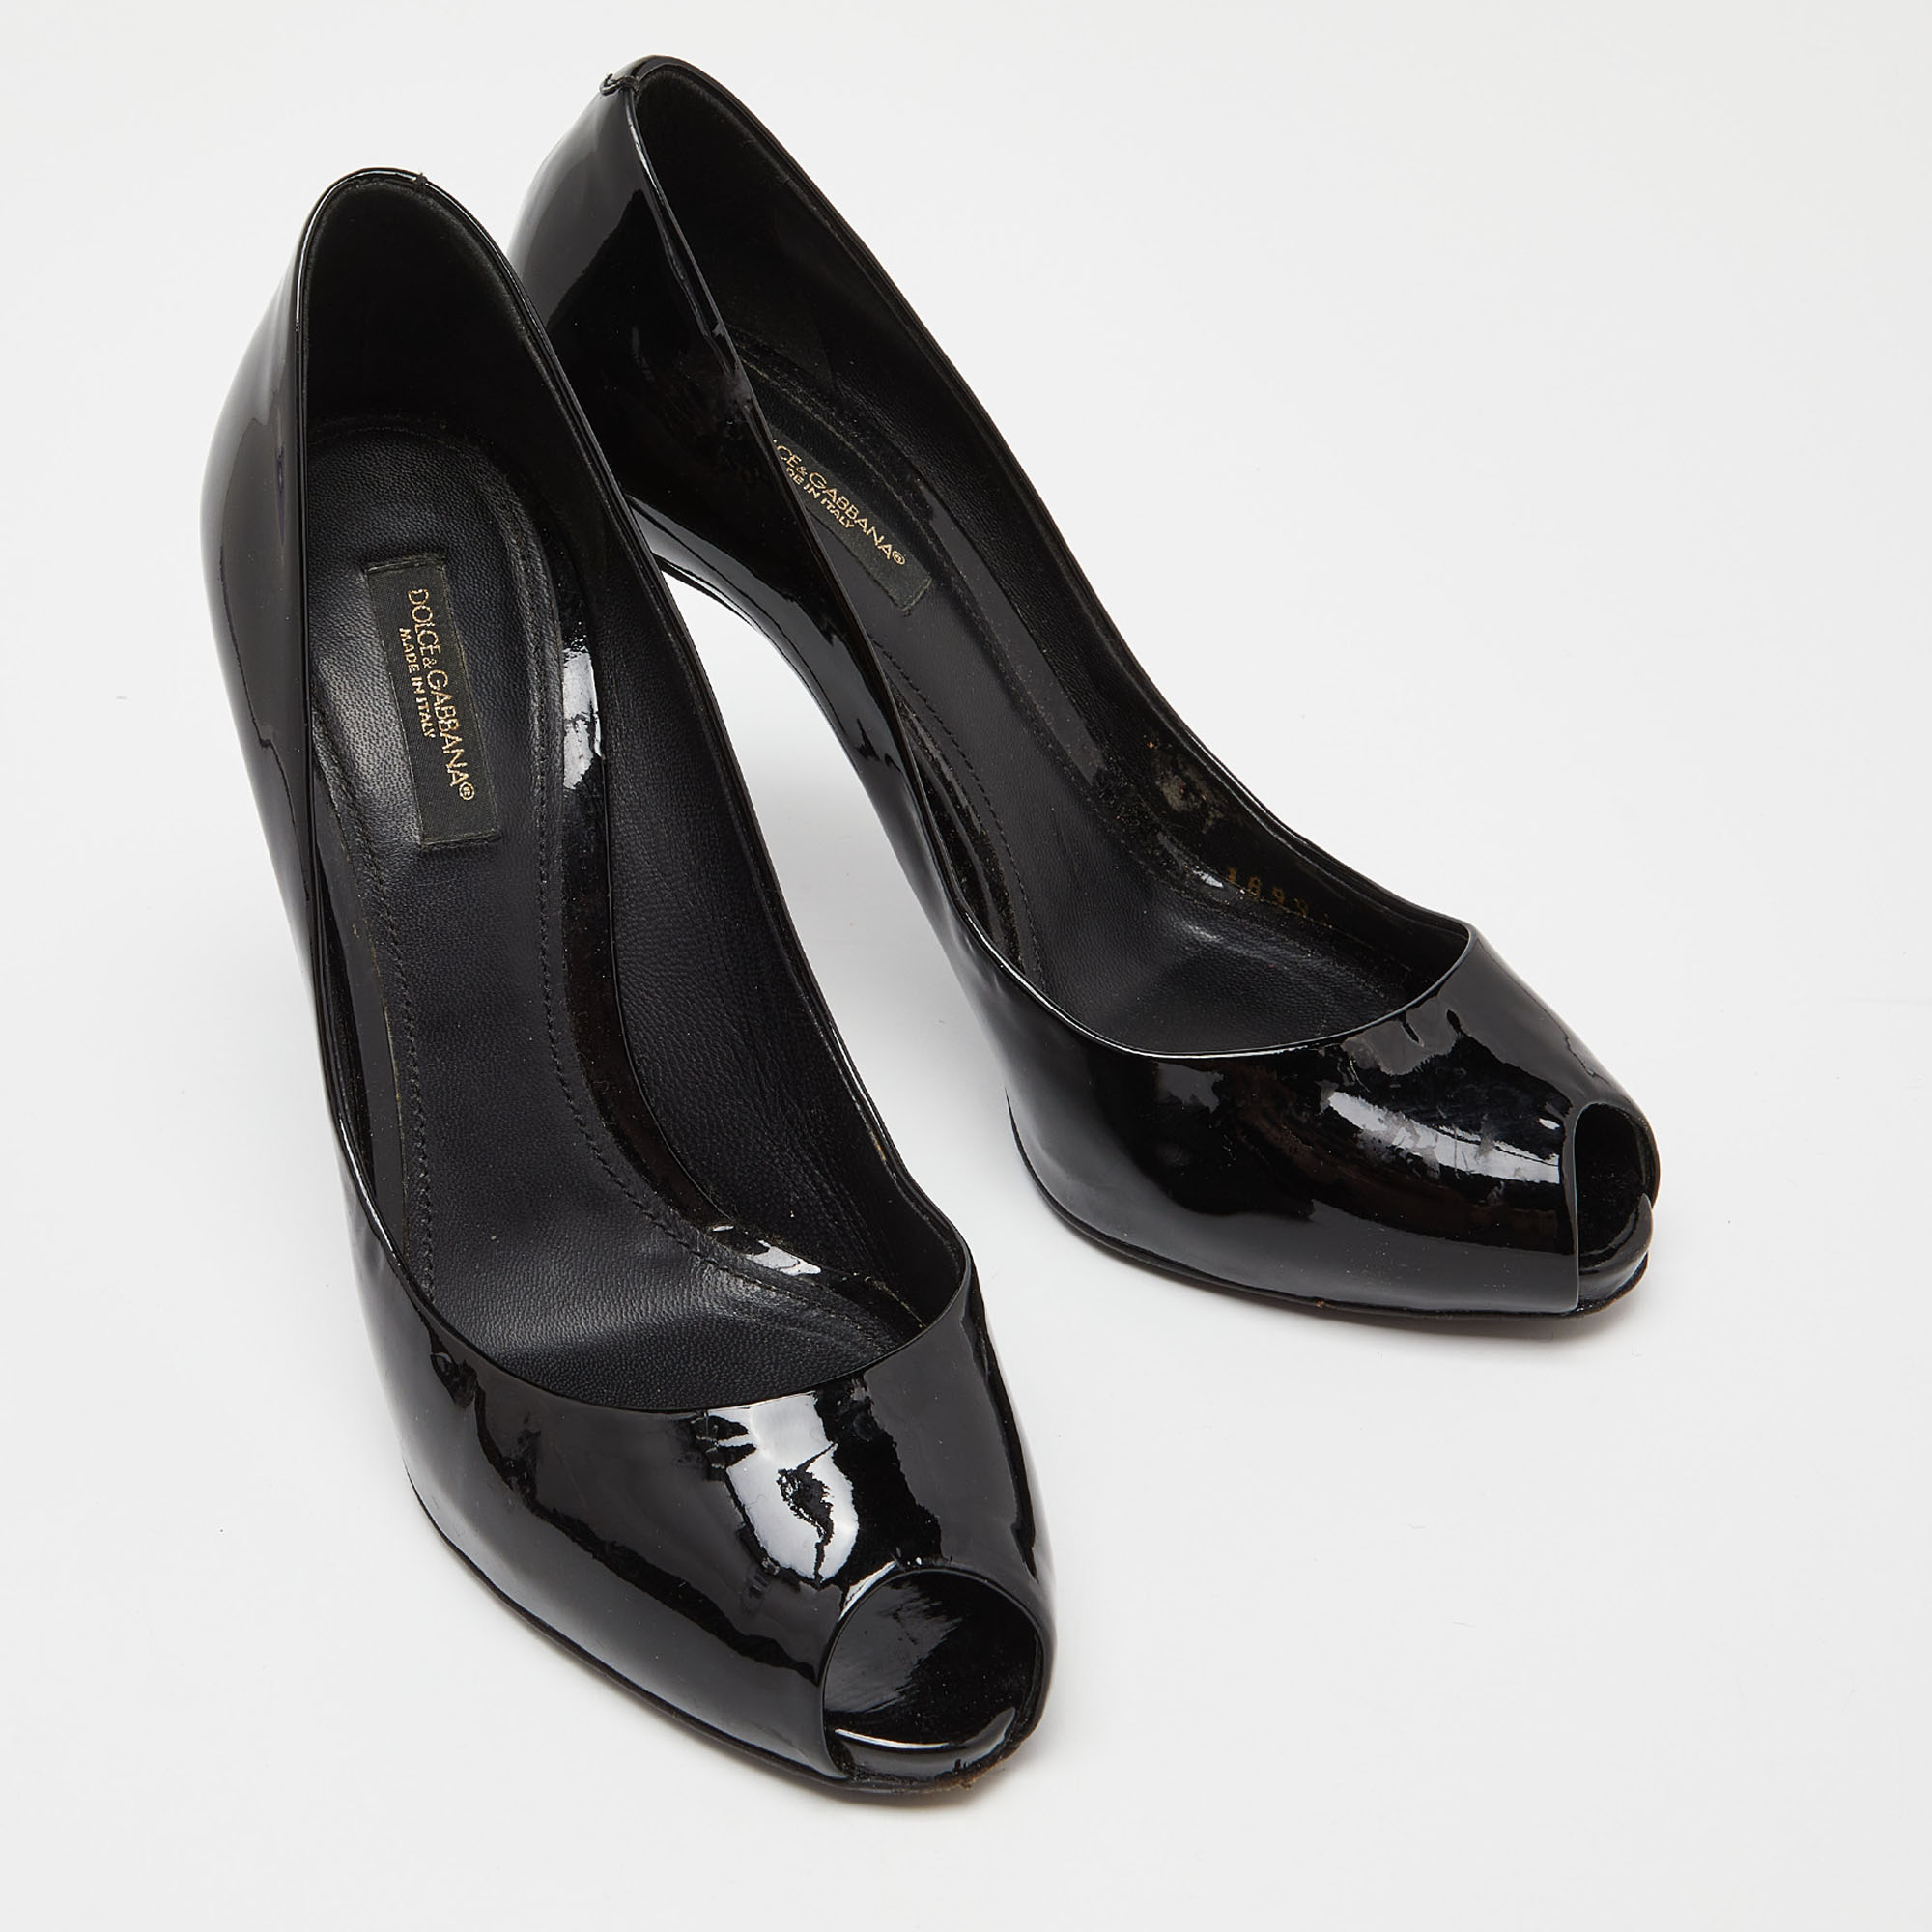 Dolce & Gabbana Black Patent Leather Platform Peep Toe Pumps Size 37